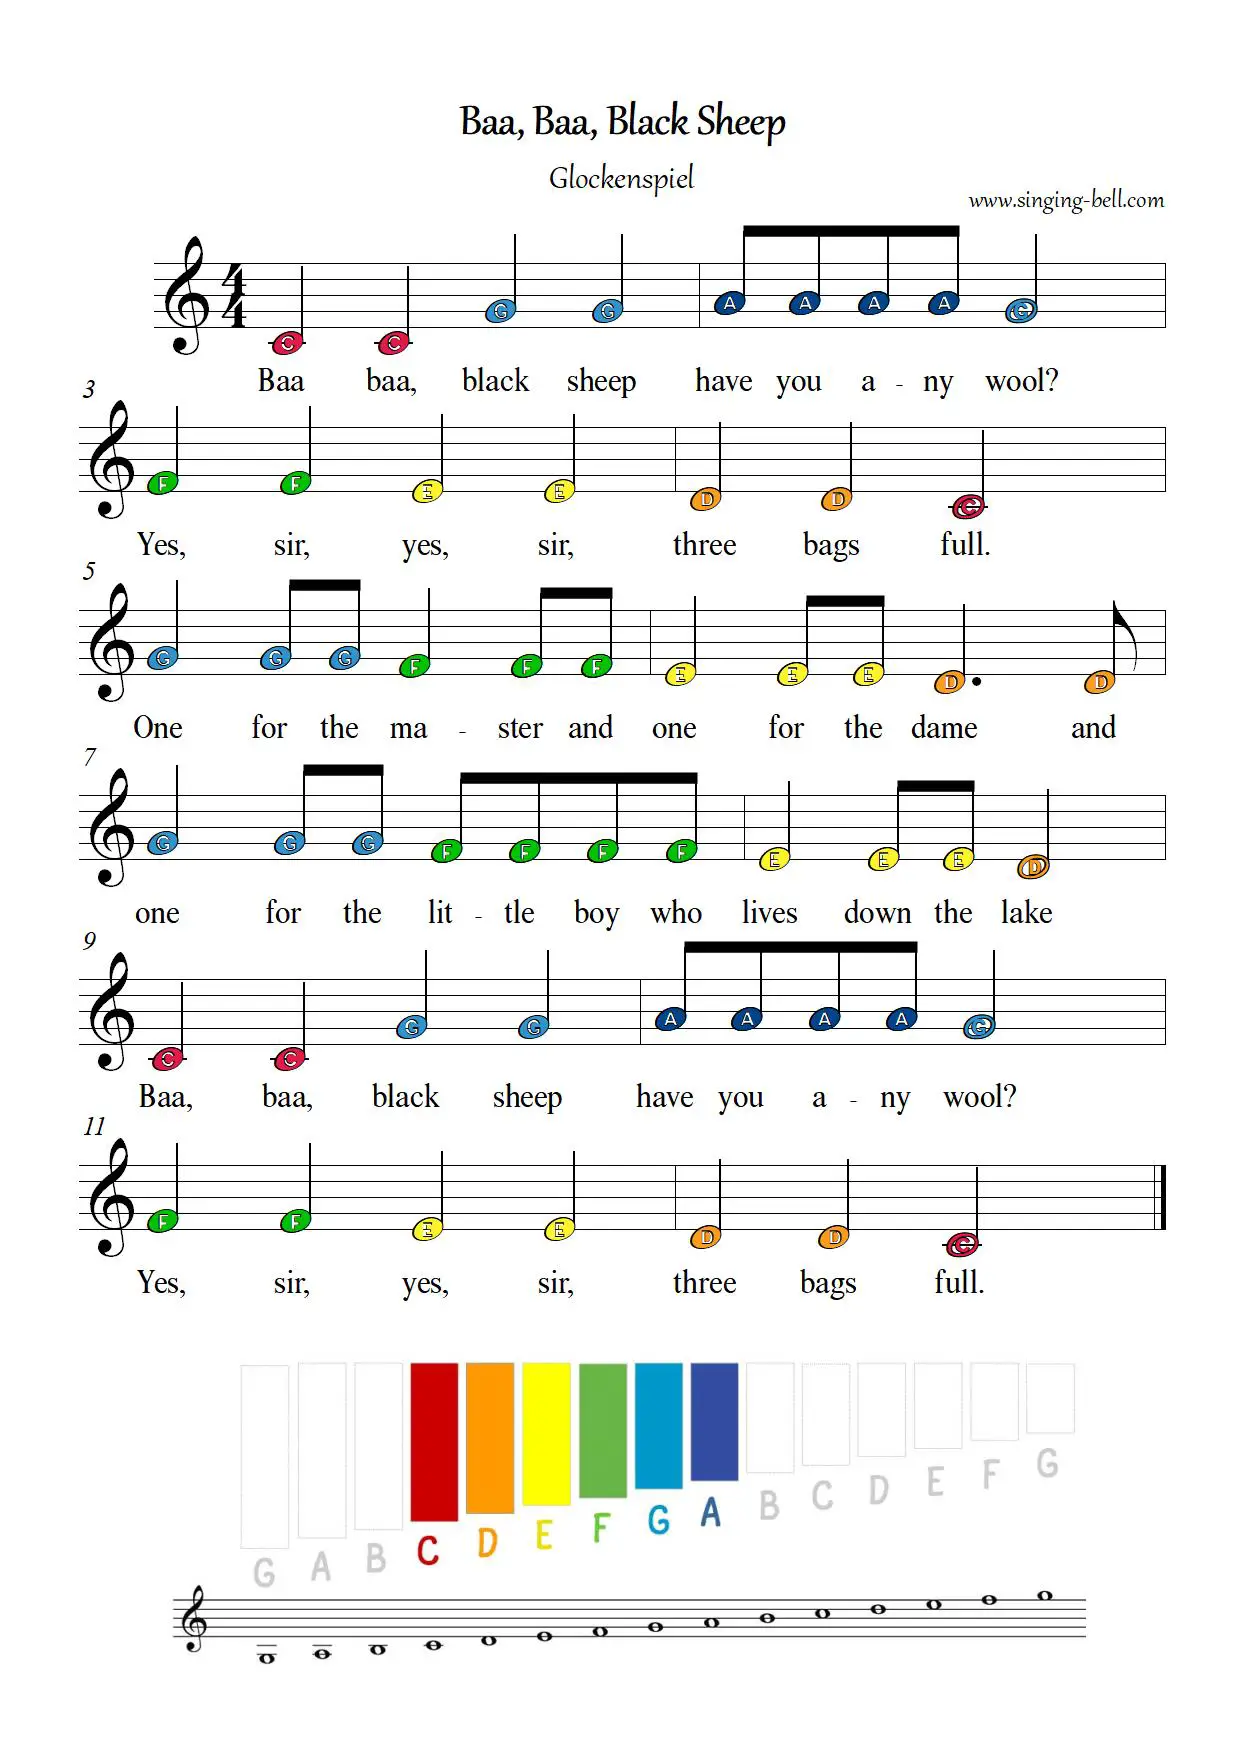 Baa Baa Black Sheep free xylophone glockenspiel sheet music color notes chart pdf